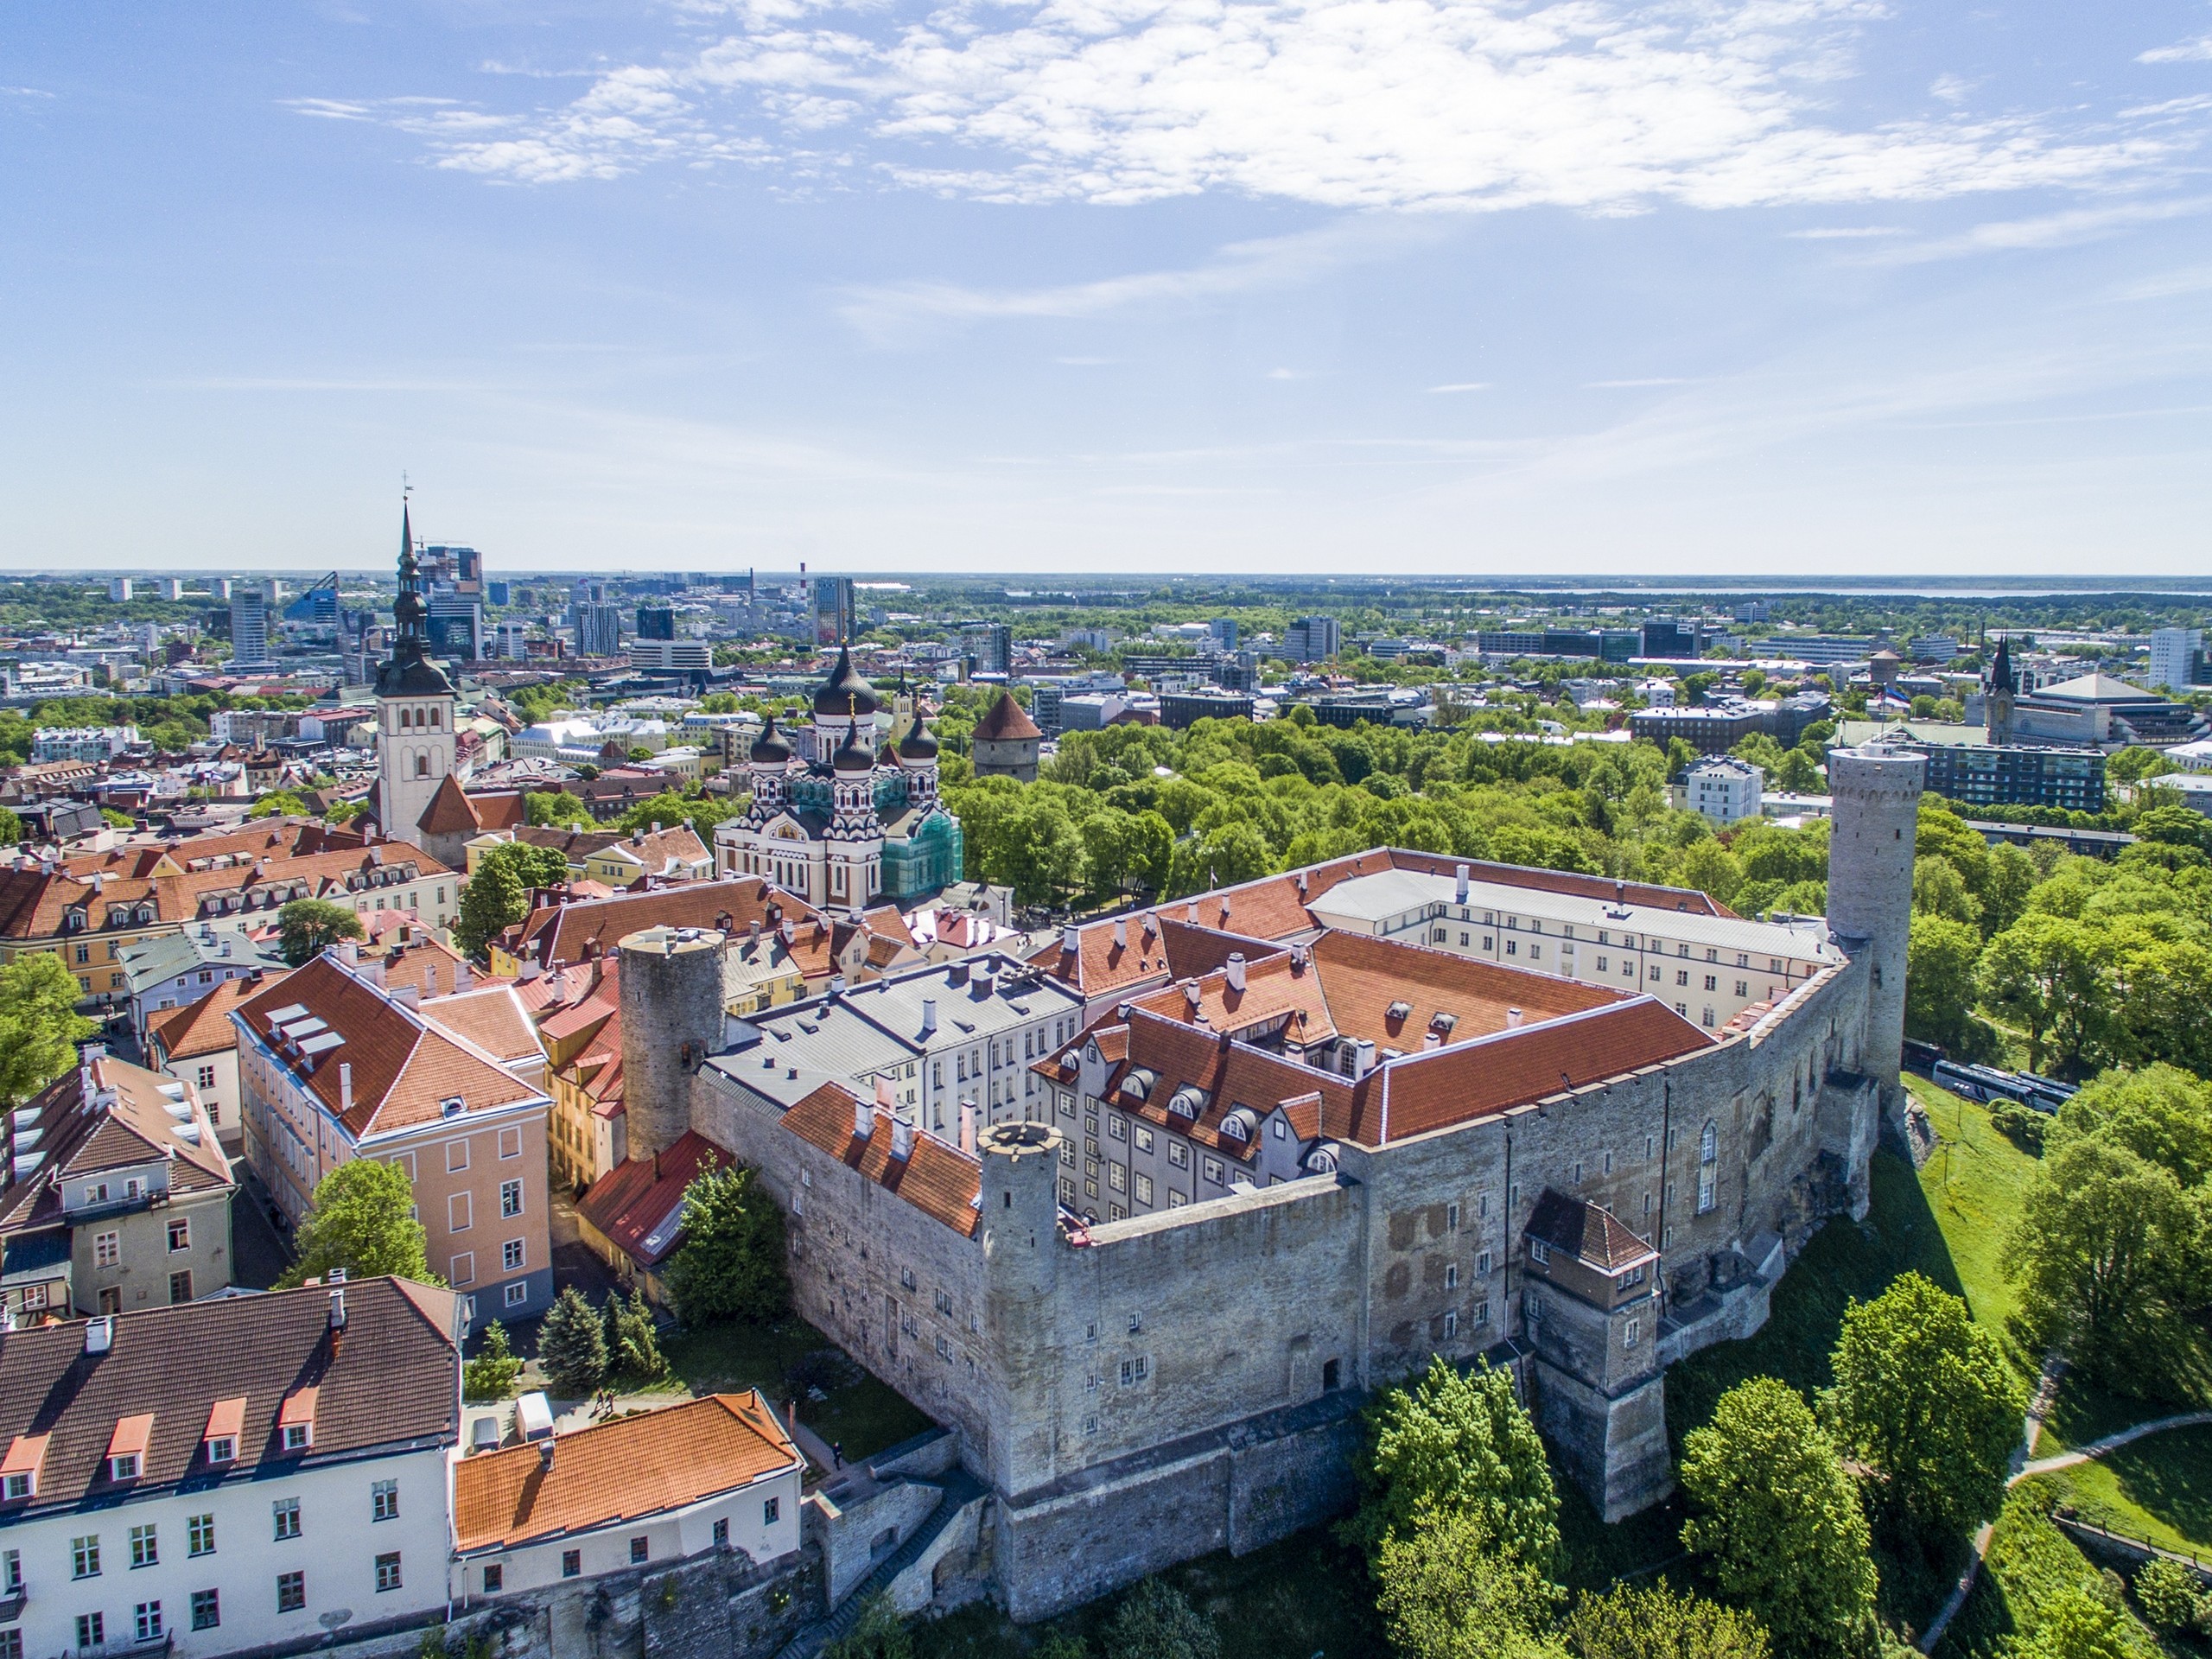 The oldtown of Tallinn